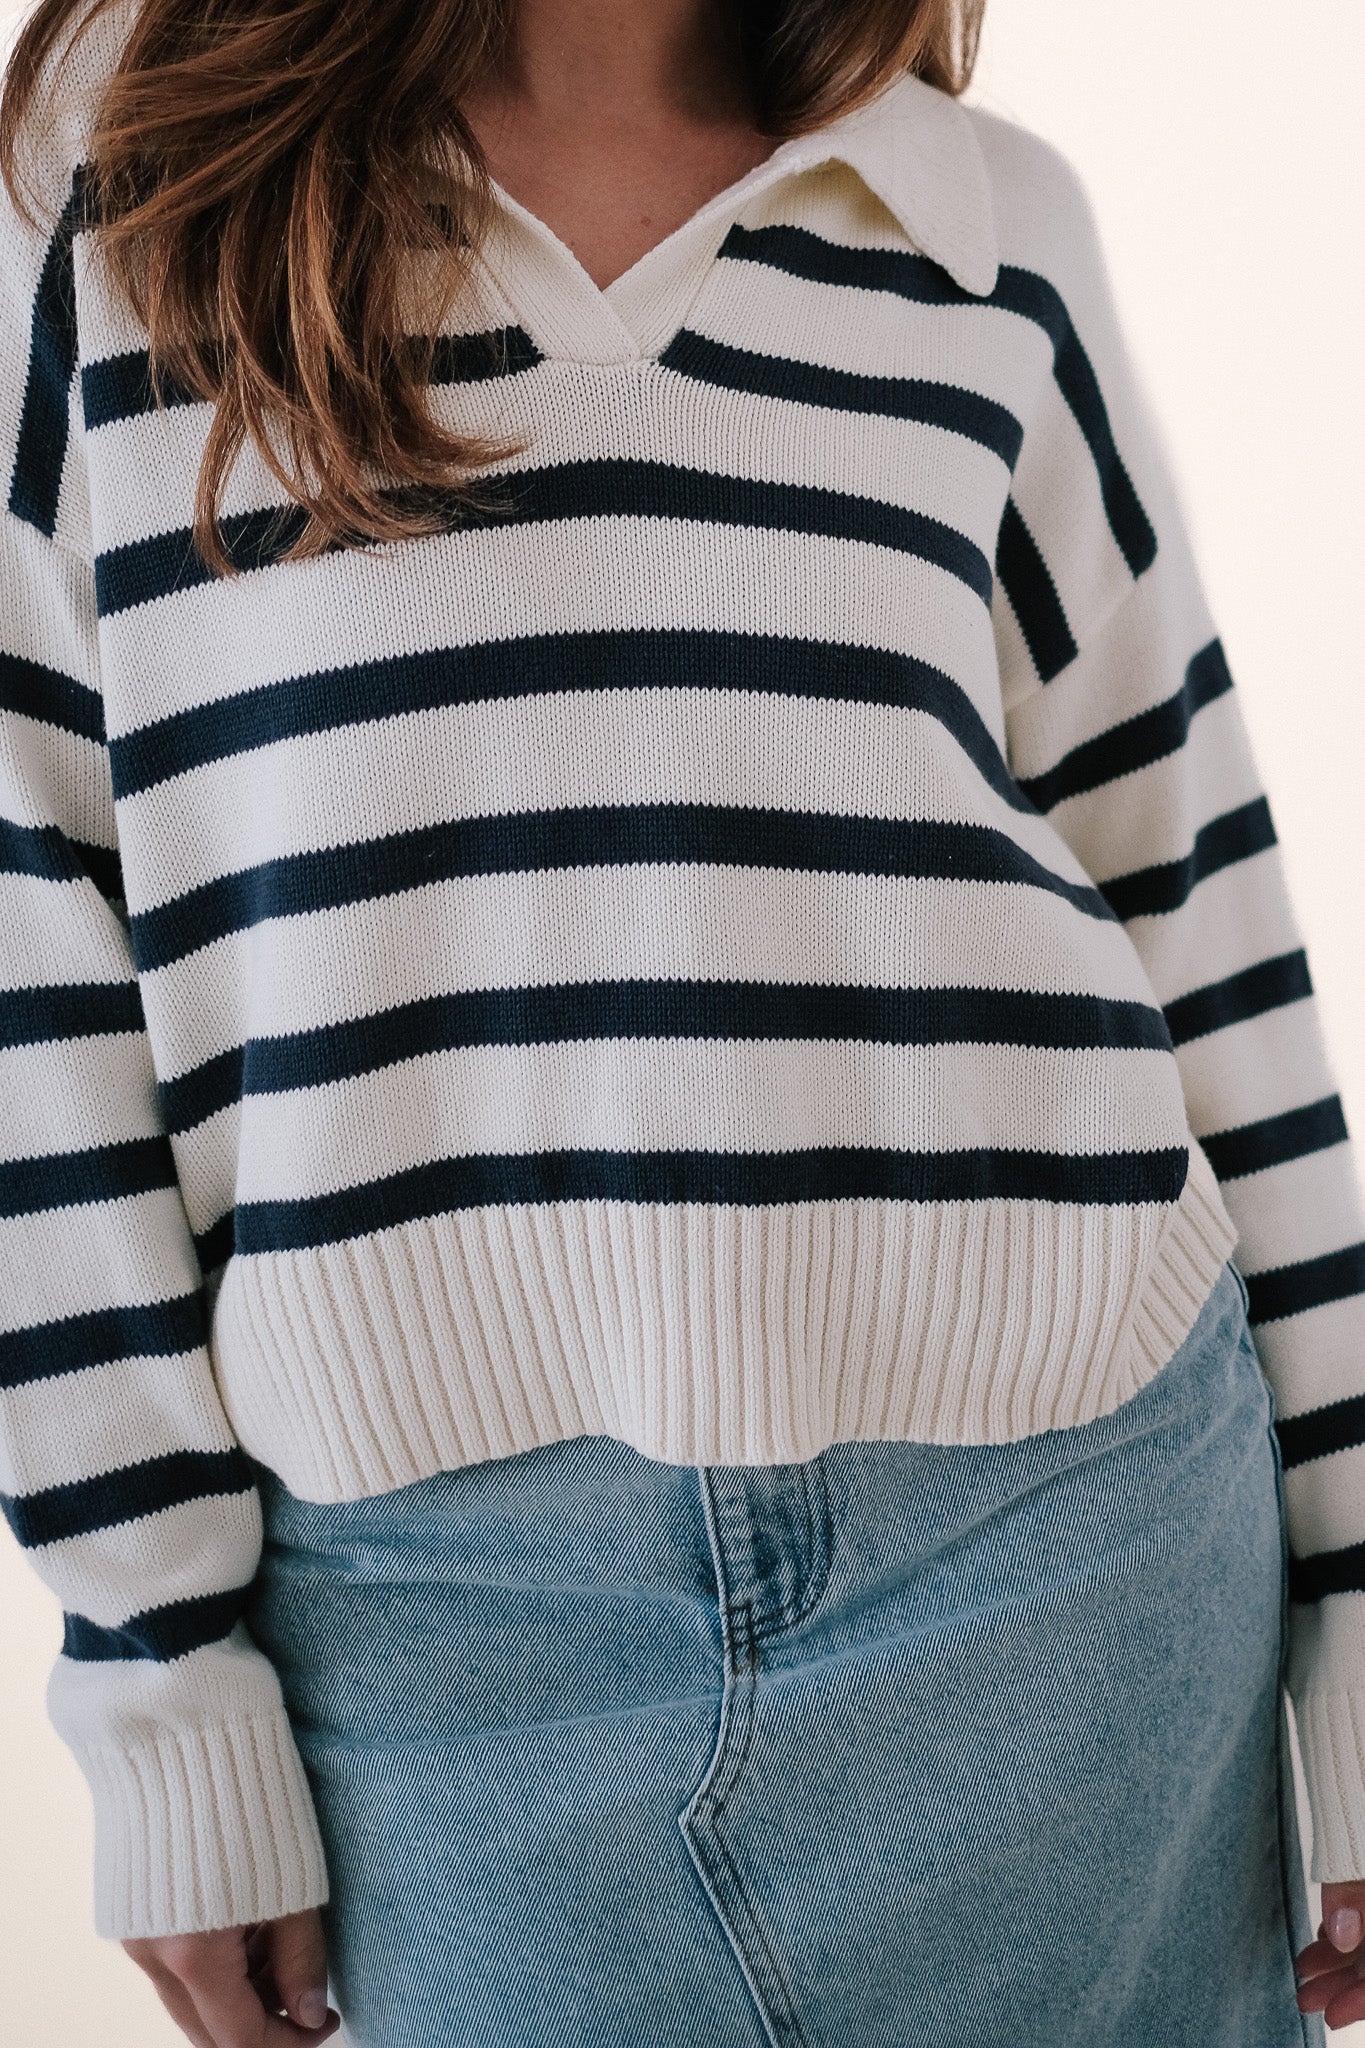 Bailey Boutique Rose Navy Sweater (L) Momni Maria Stripe – and Collared Cream